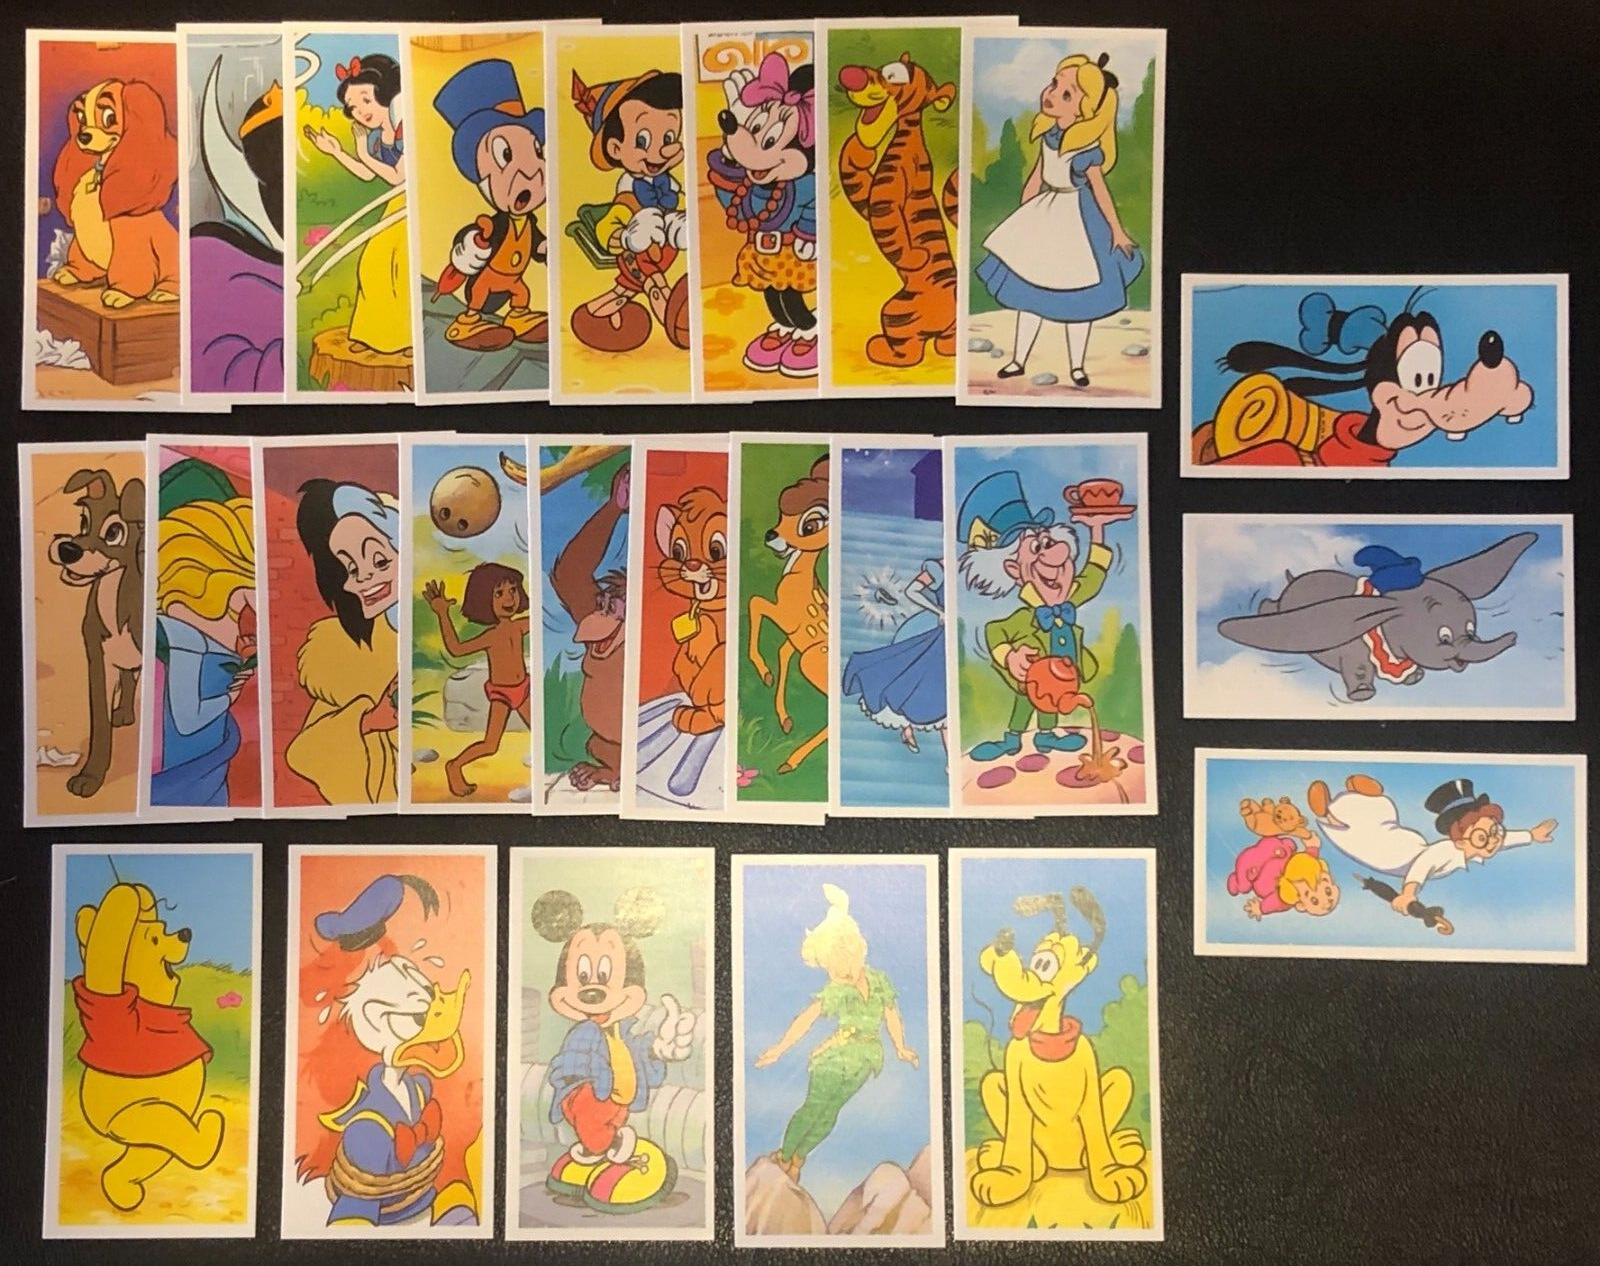 The Magical World of Disney 1989 Brooke Bond Tea TV Movie Trading Card Set #1-25